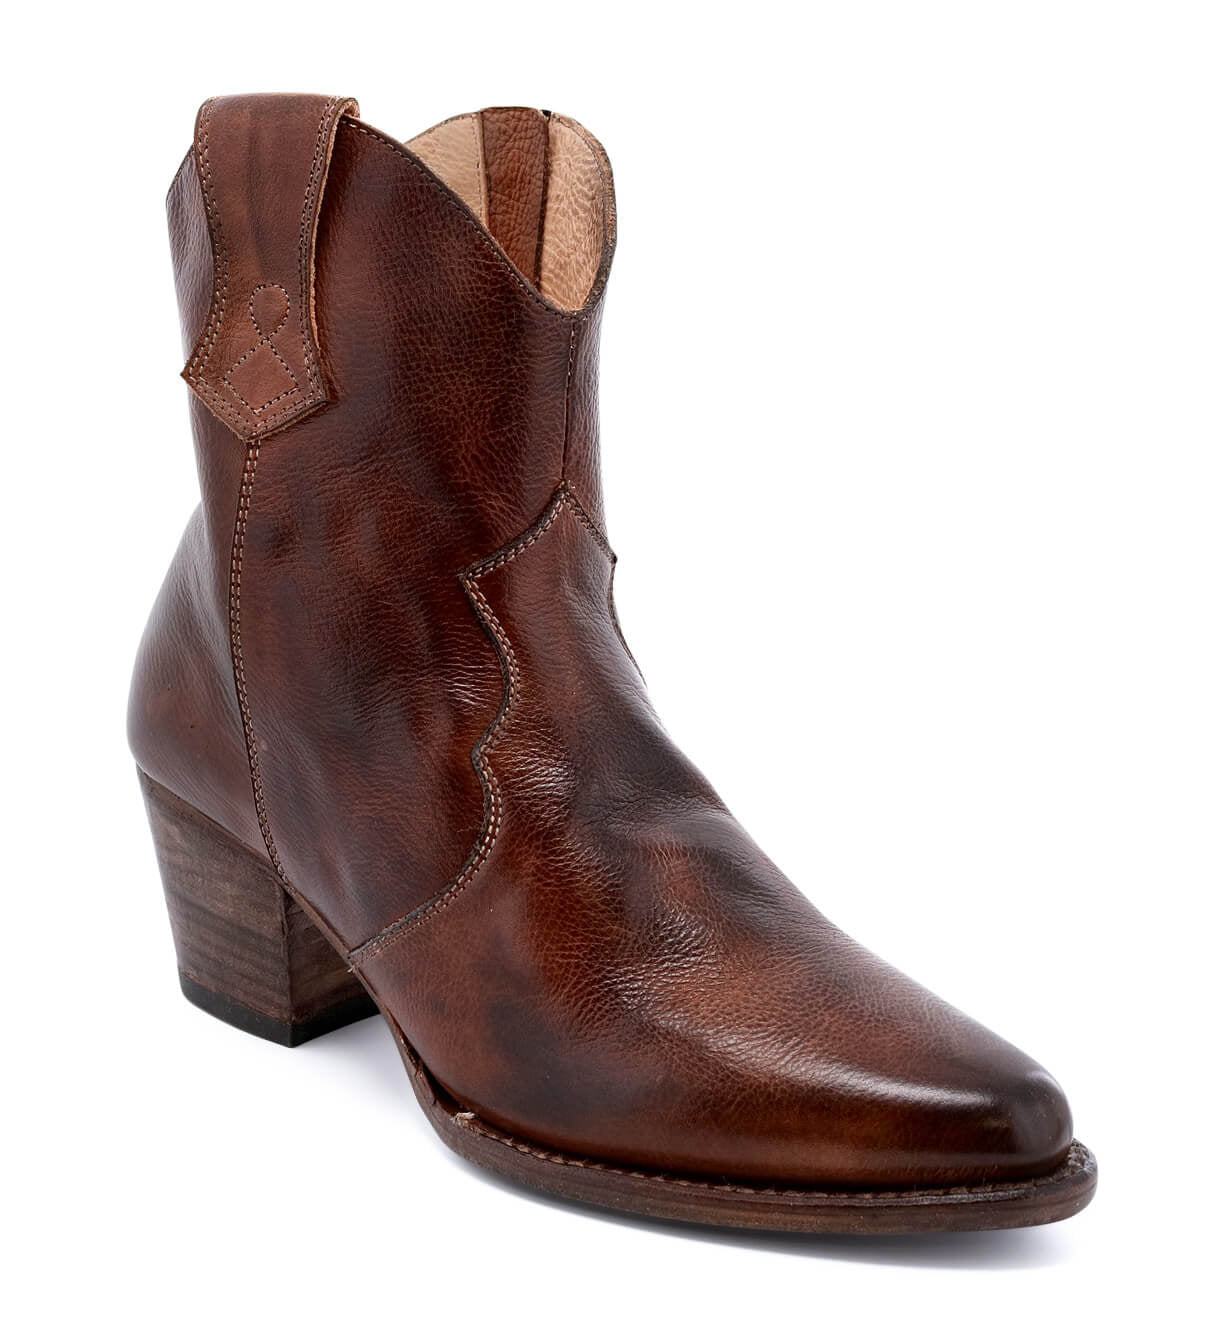 An Oak Tree Farms women's brown cowboy boot with a wooden heel.